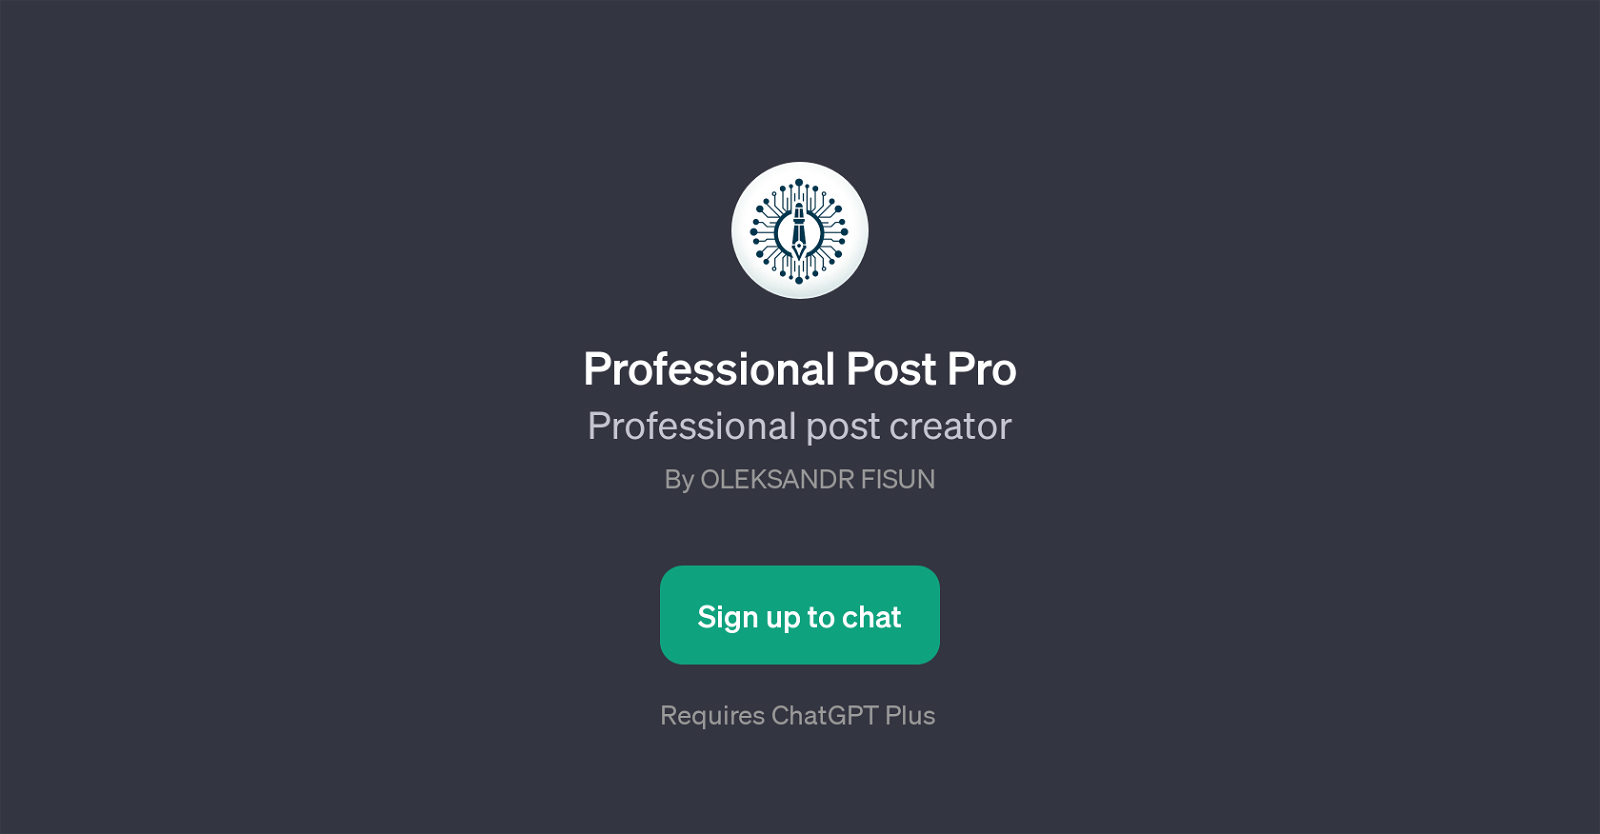 Professional Post Pro website